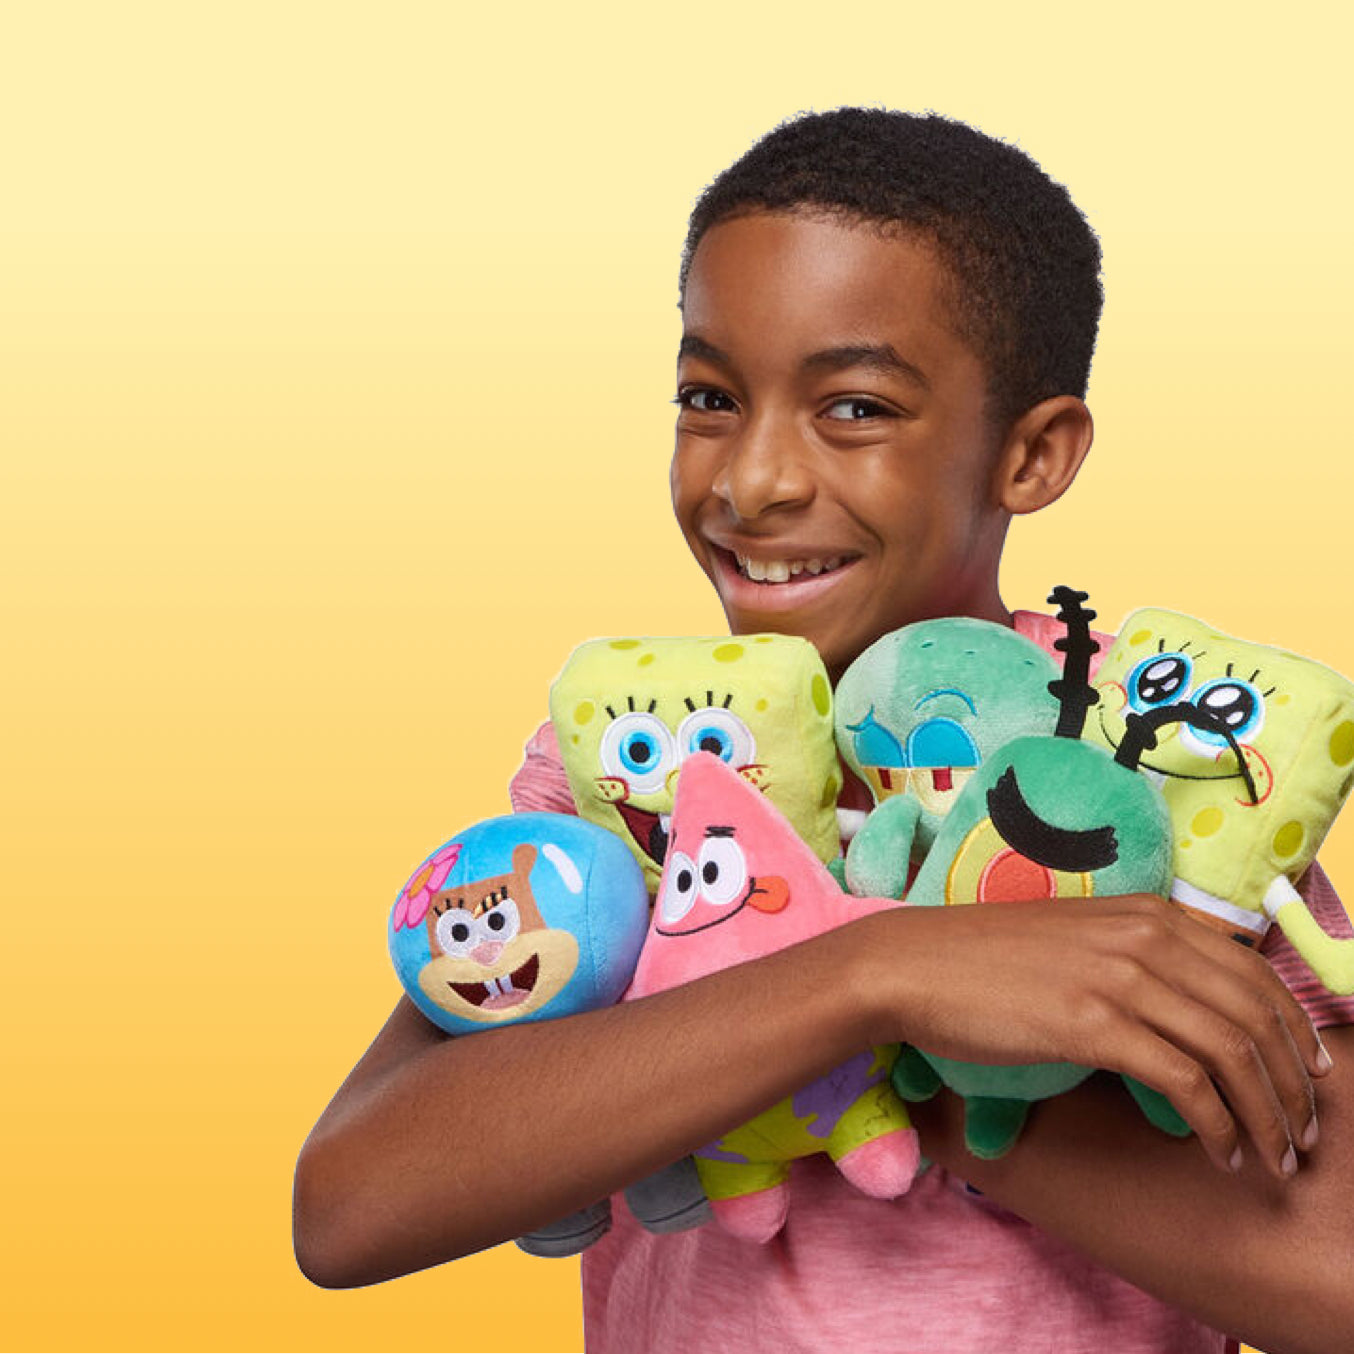 boy holding collection of spongebob squarepants character plush toys